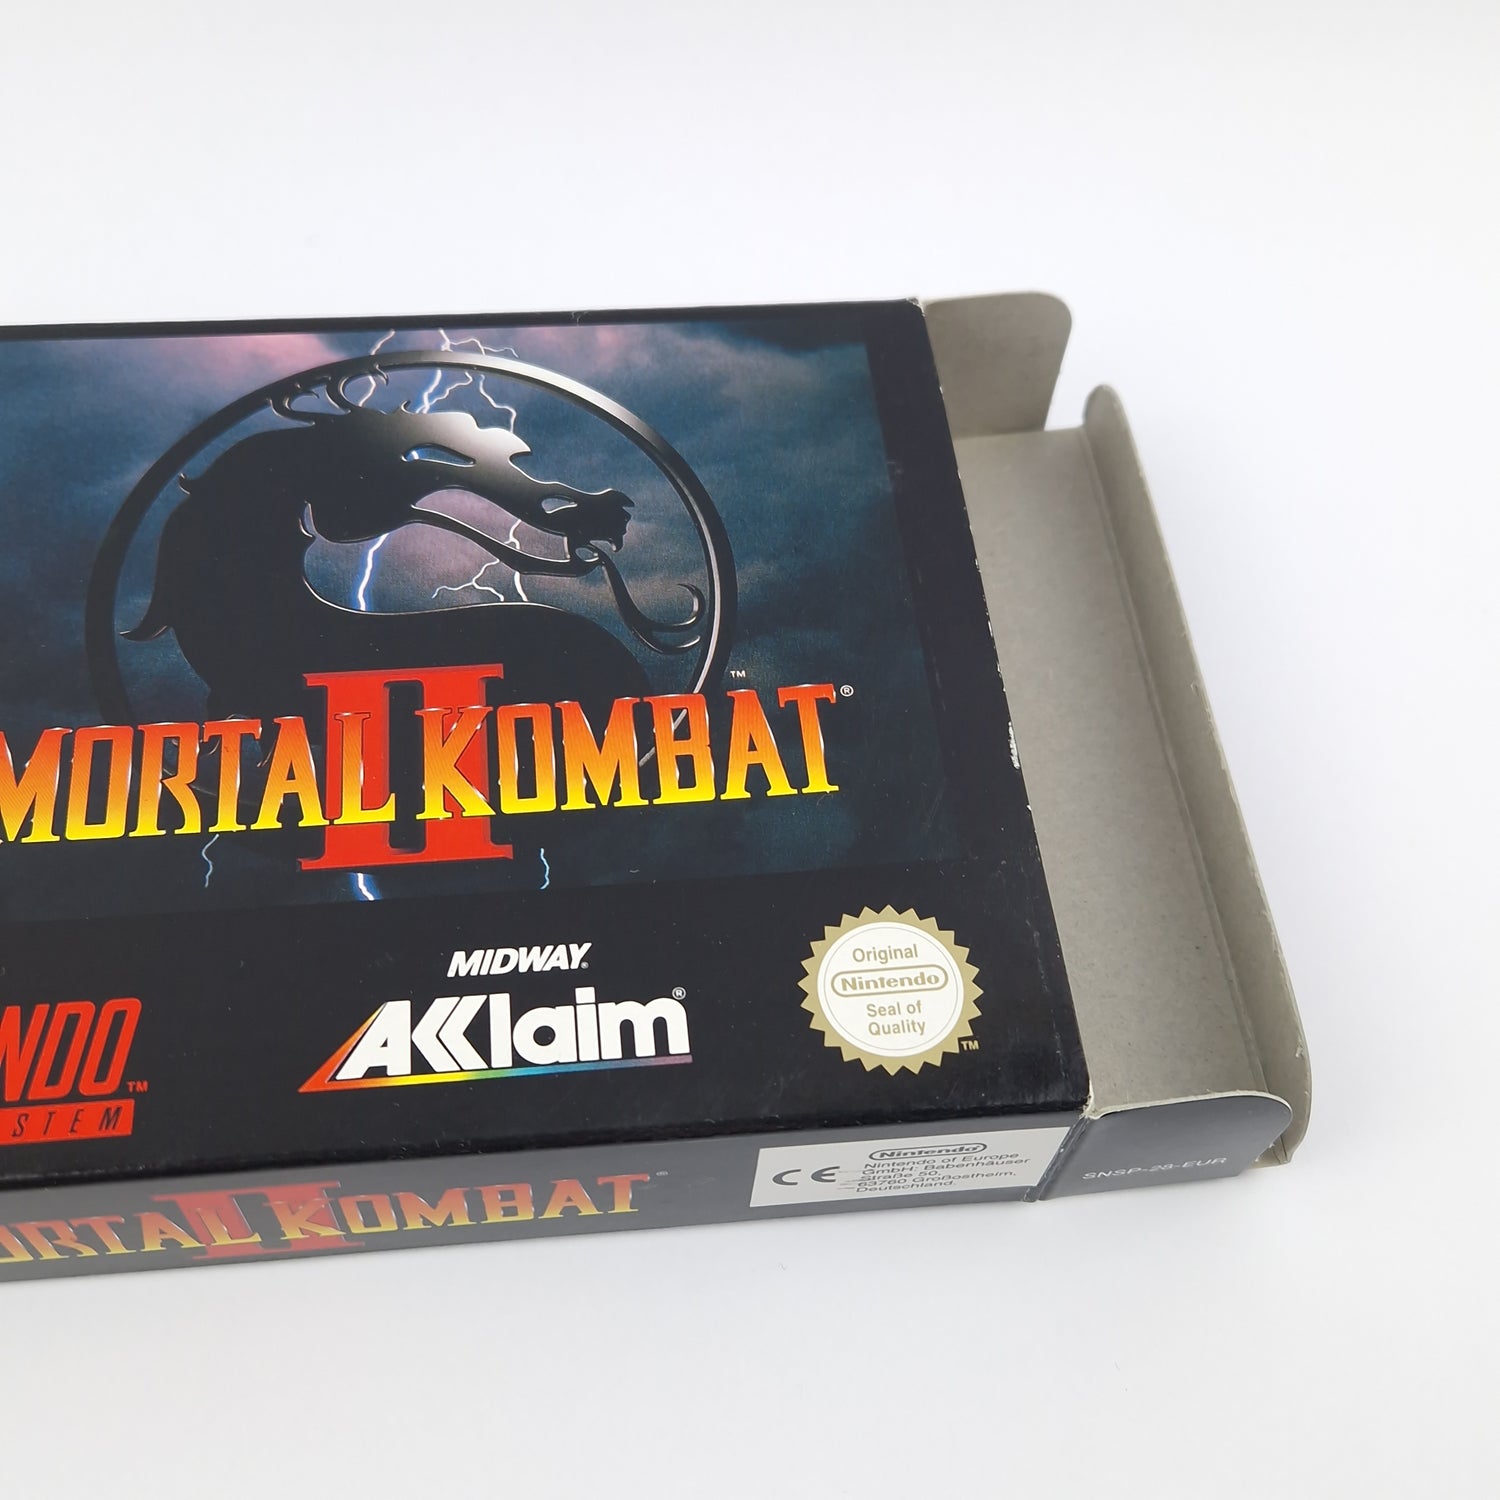 Super Nintendo Spiel : Mortal Kombat II - Modul Anleitung OVP cib | SNES PAL EUR